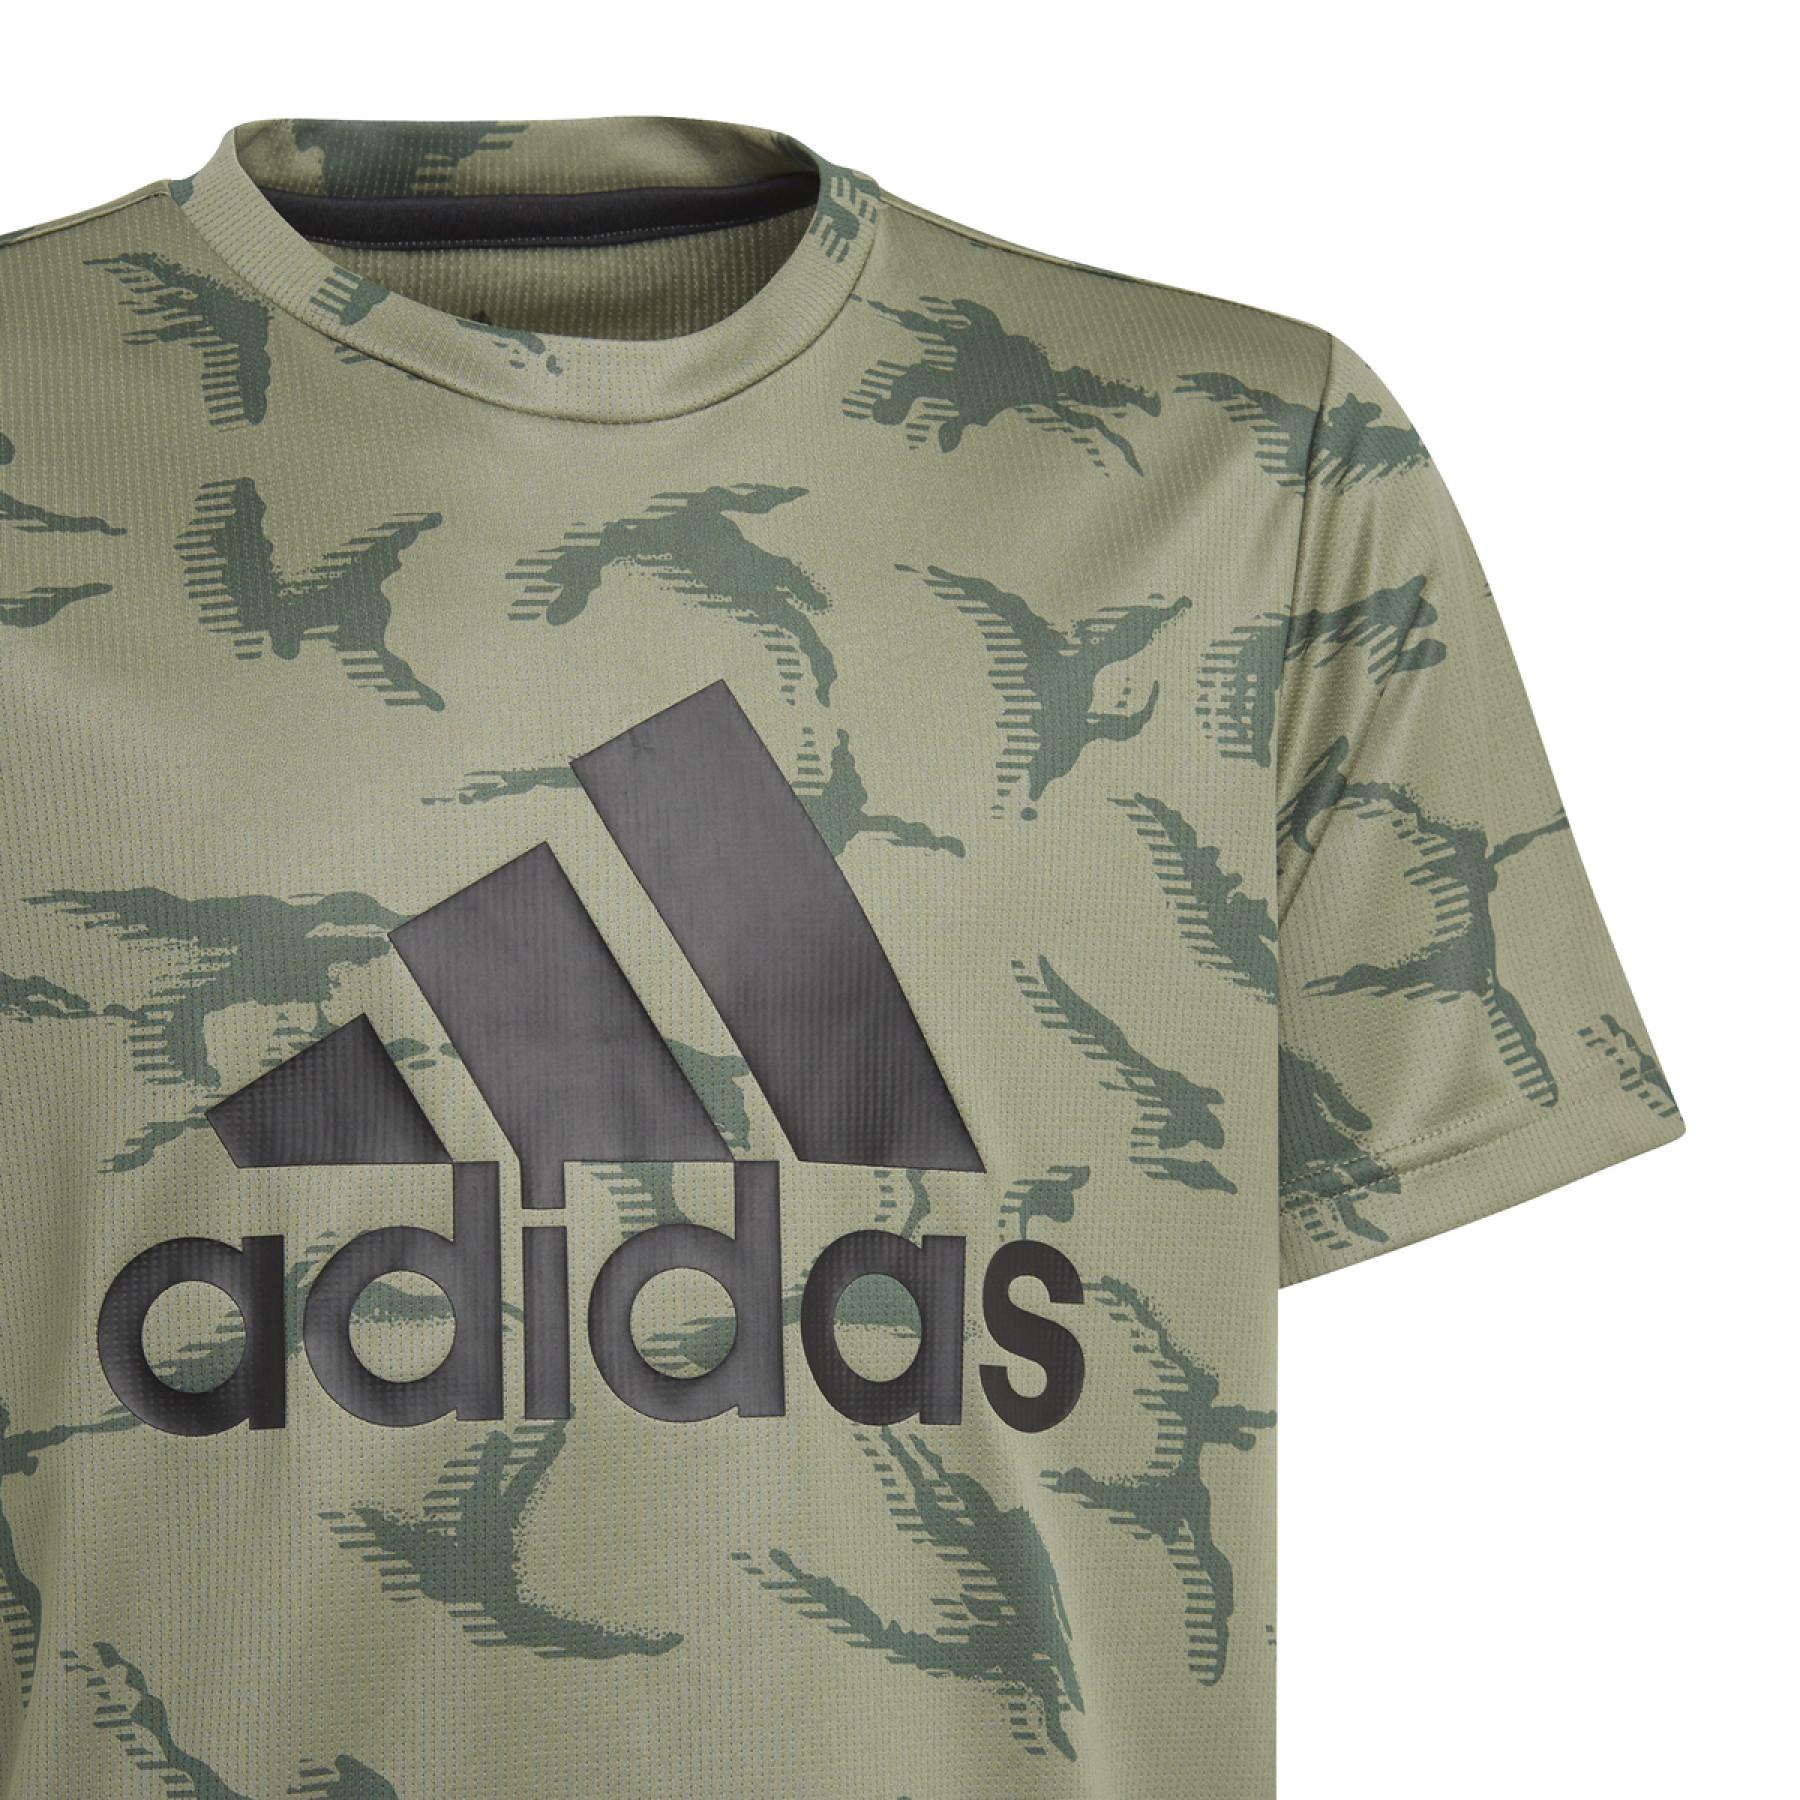 T-shirt enfant adidas Designed To Move Camouflage